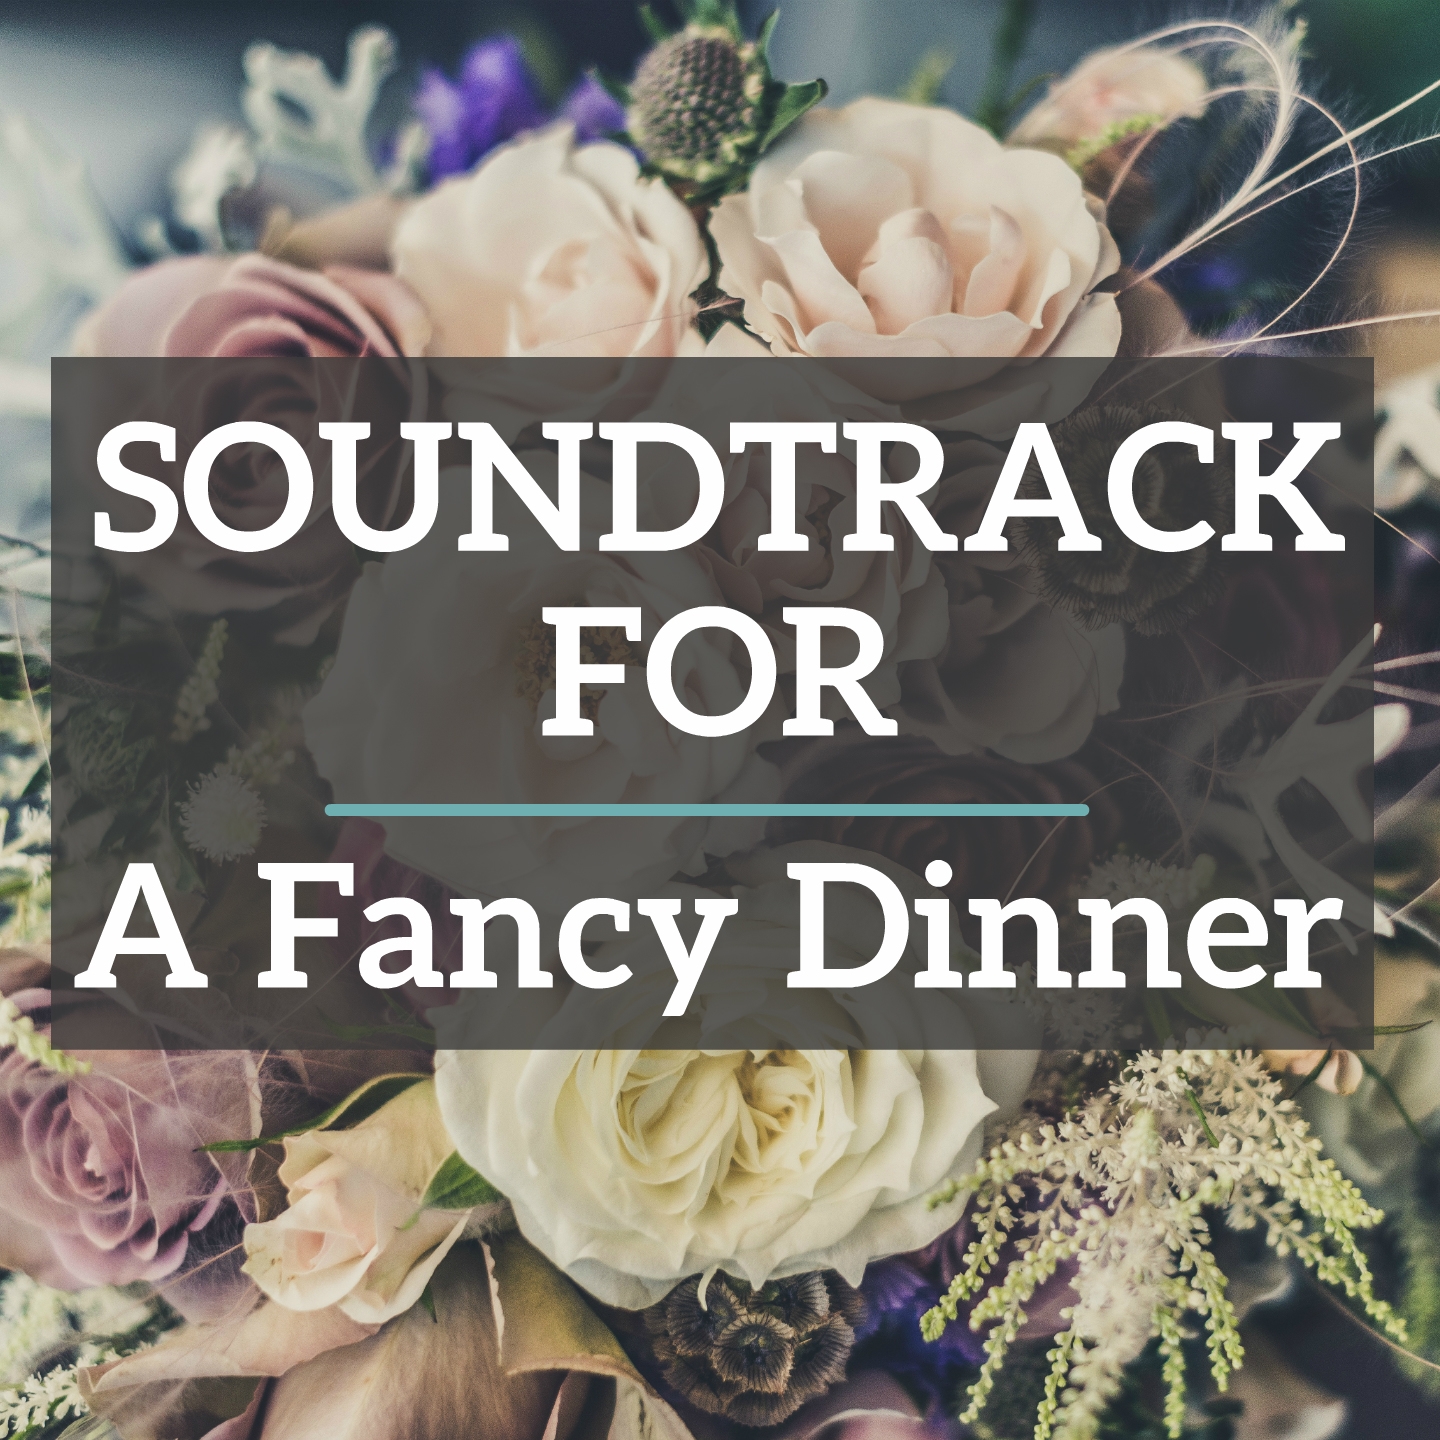 Soundtrack for a fancy dinner